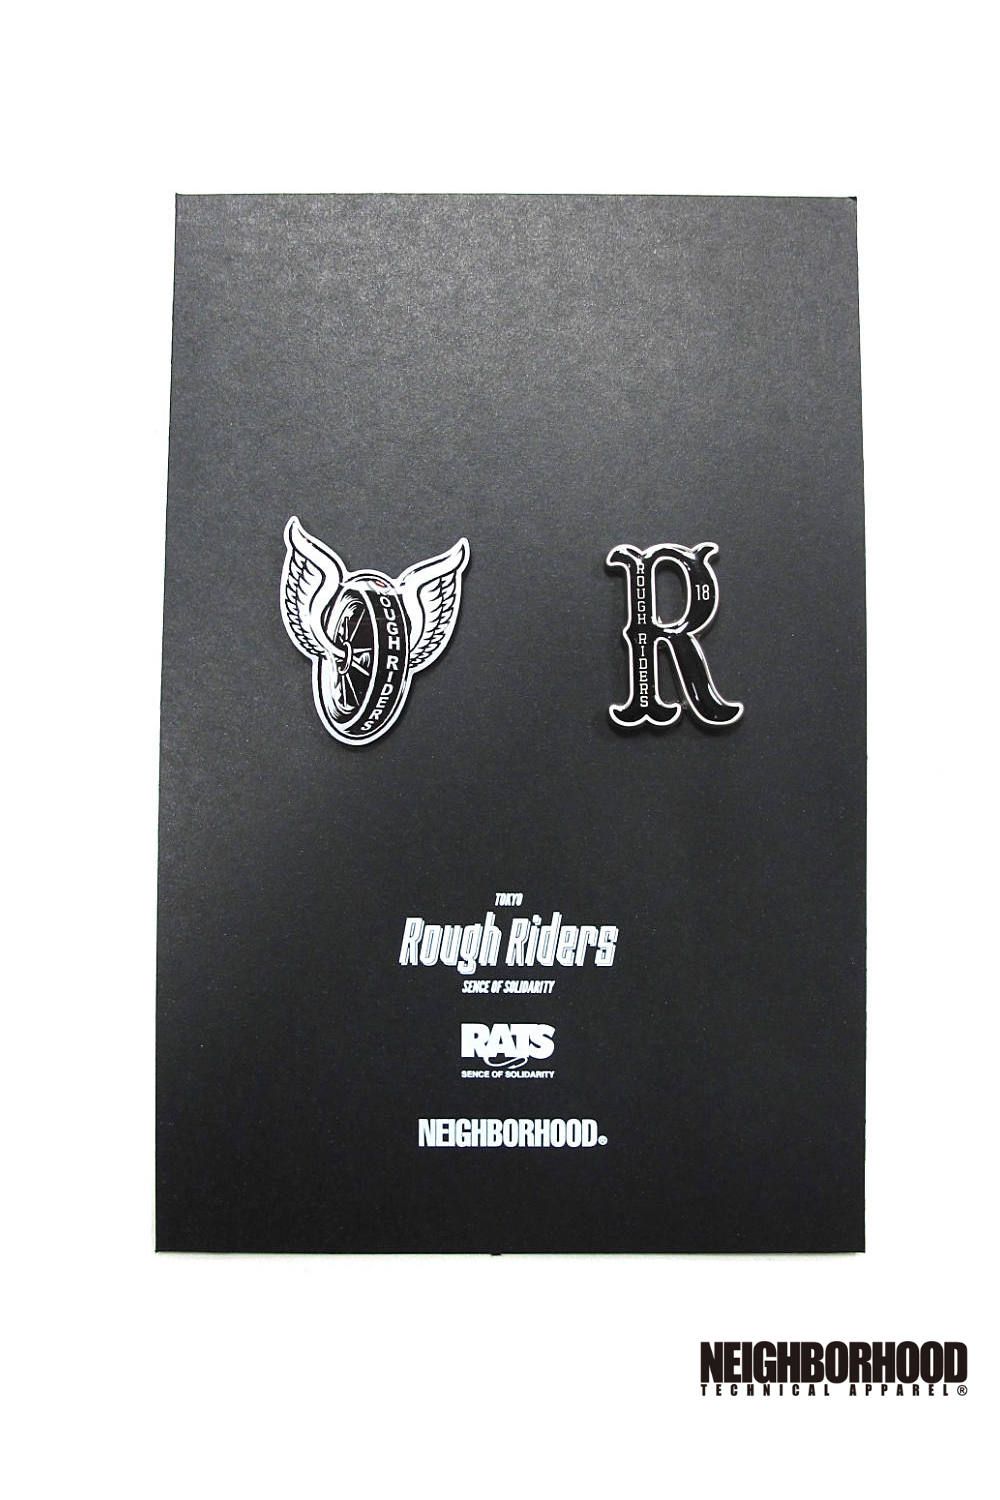 RATS ×NEIGHBORHOOD PINS (BLACK) ×ネイバーフッド TOKYO ROUGH RIDERS  バッジセット LOOPHOLE